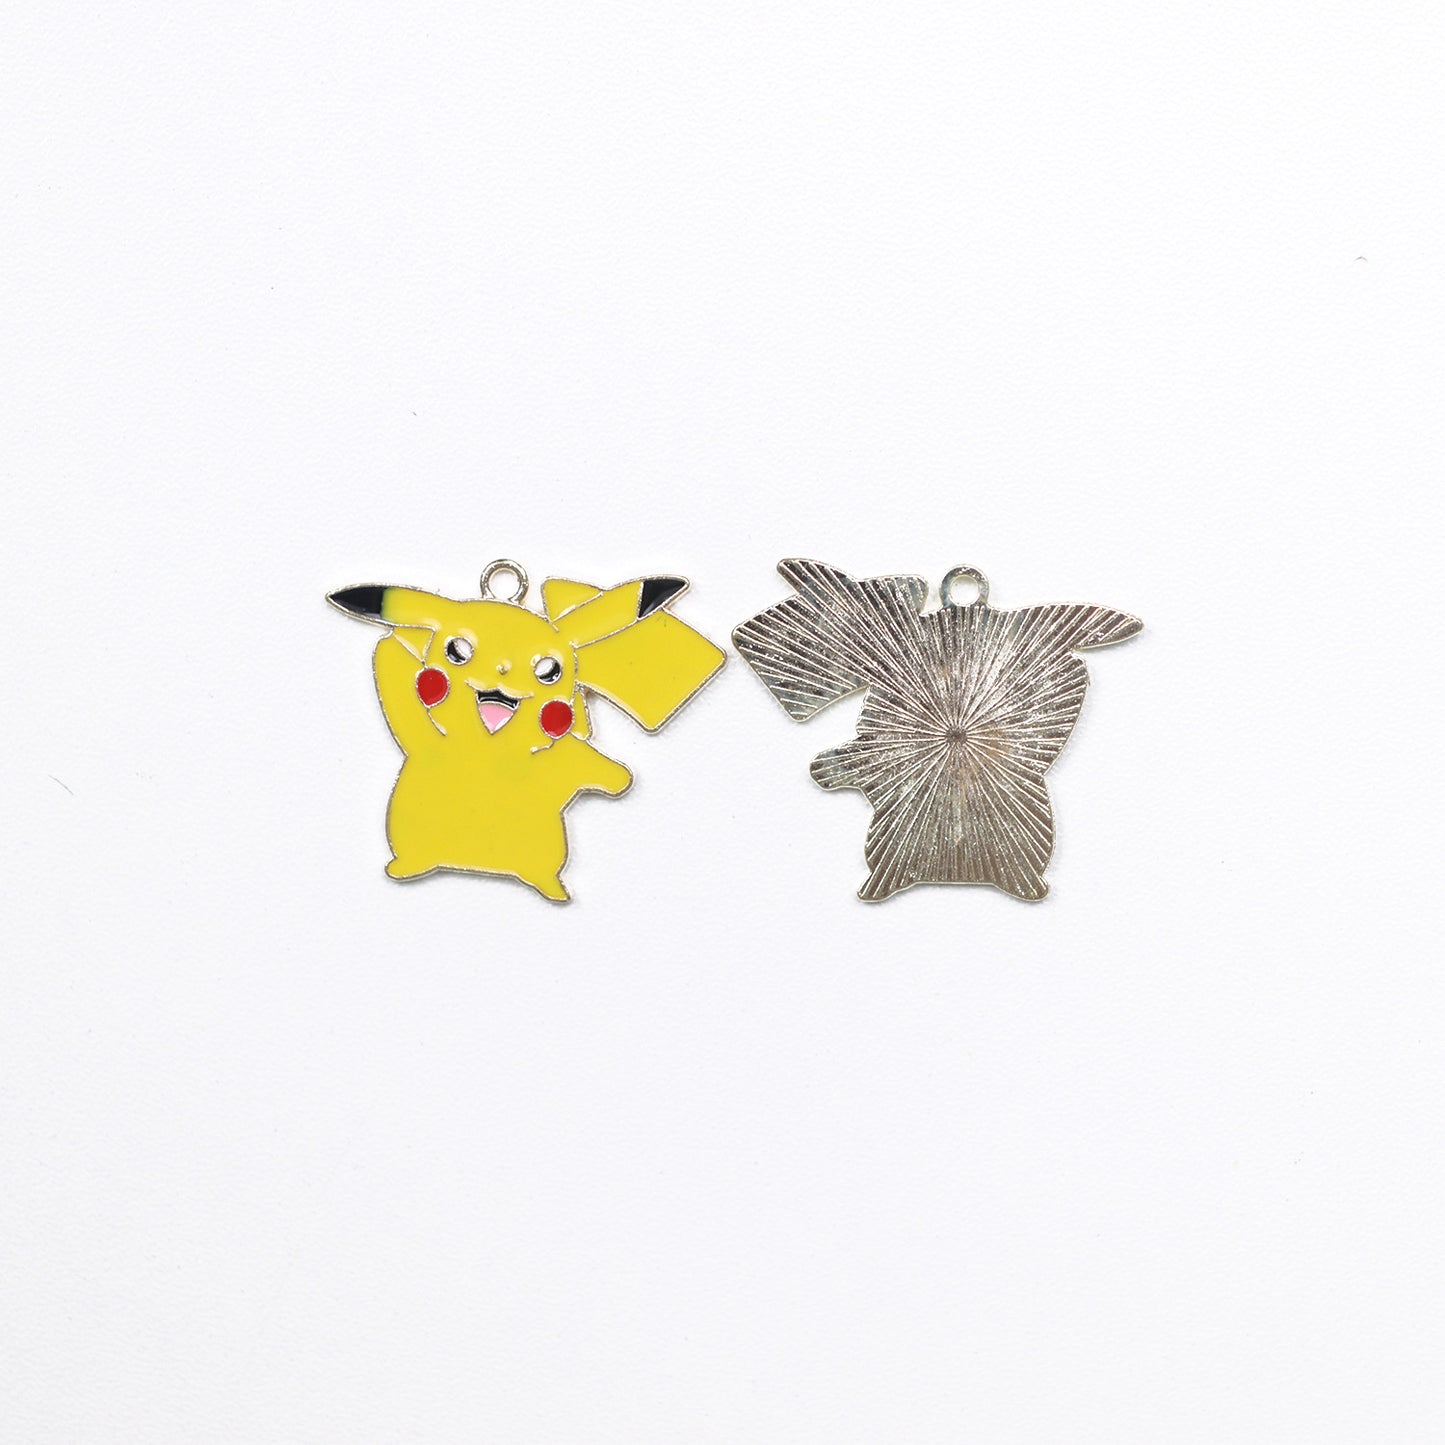 Pikachu Metal Charms Earrings Accessories Pendant Accessories DIY